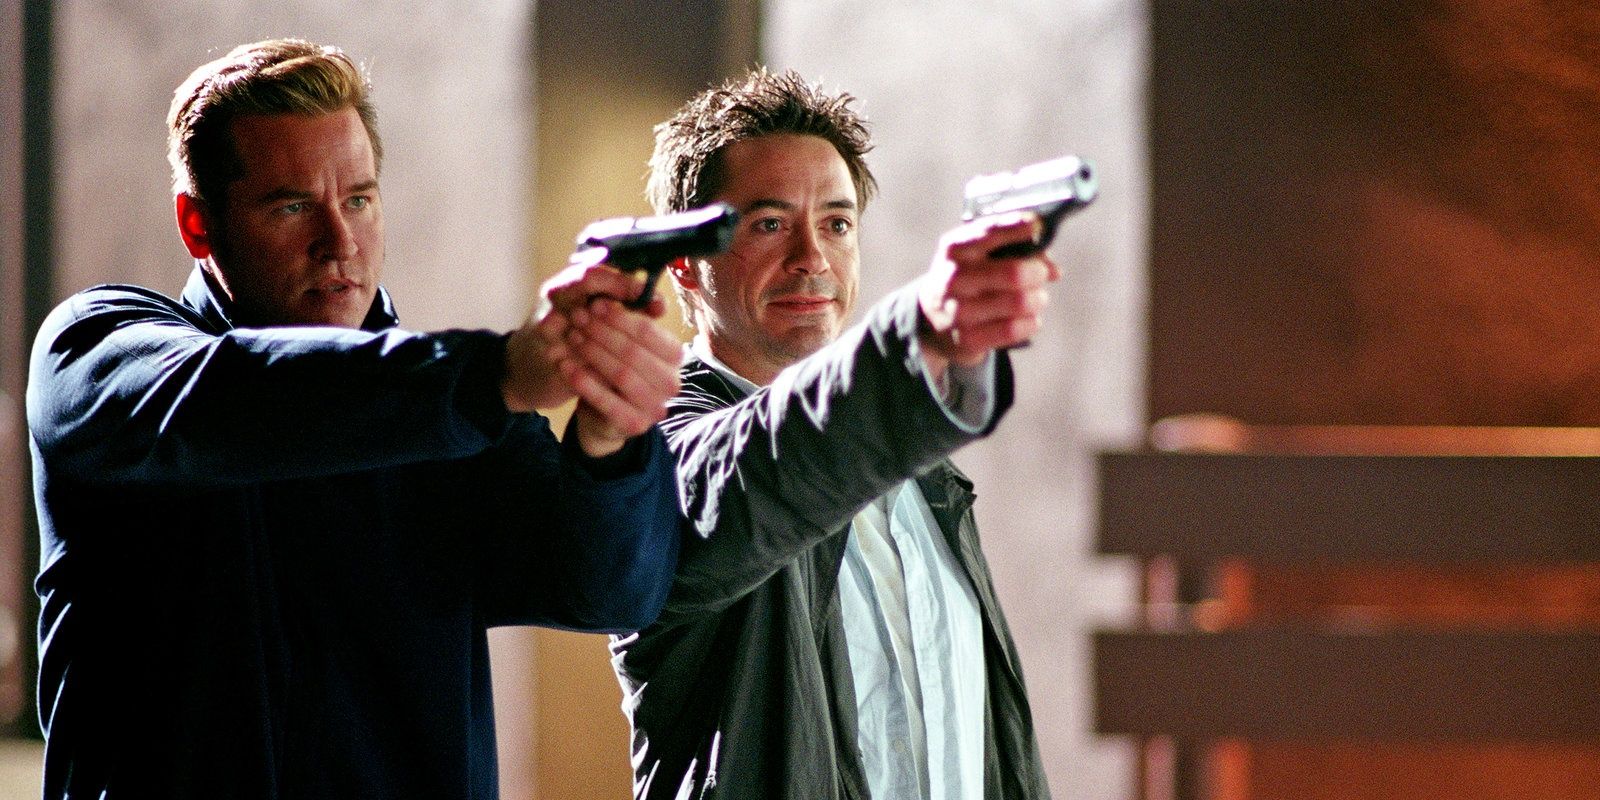 Robert Downey Jr and Val Kilmer